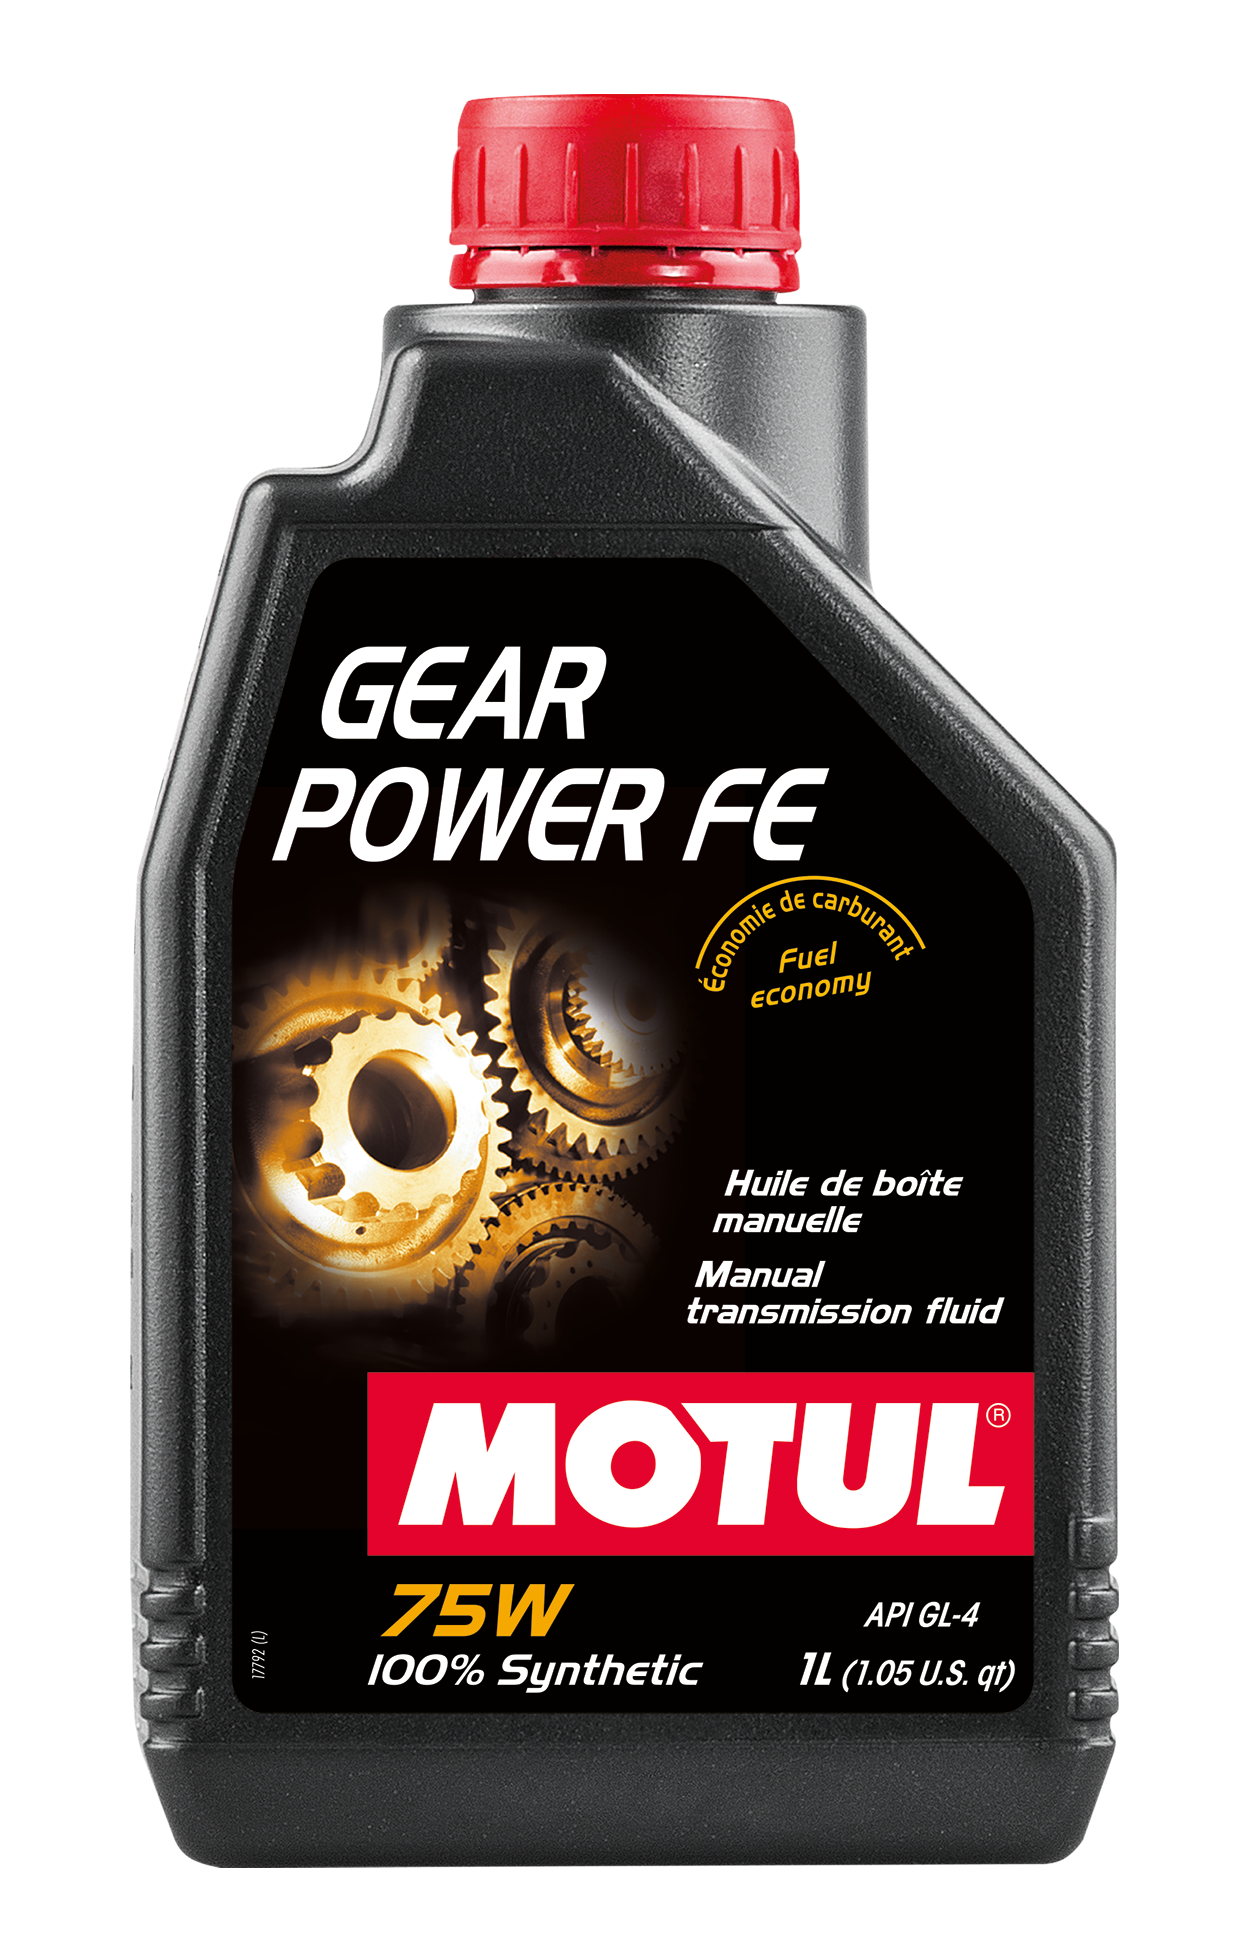 MOTUL Gear Power FE SAE 75W